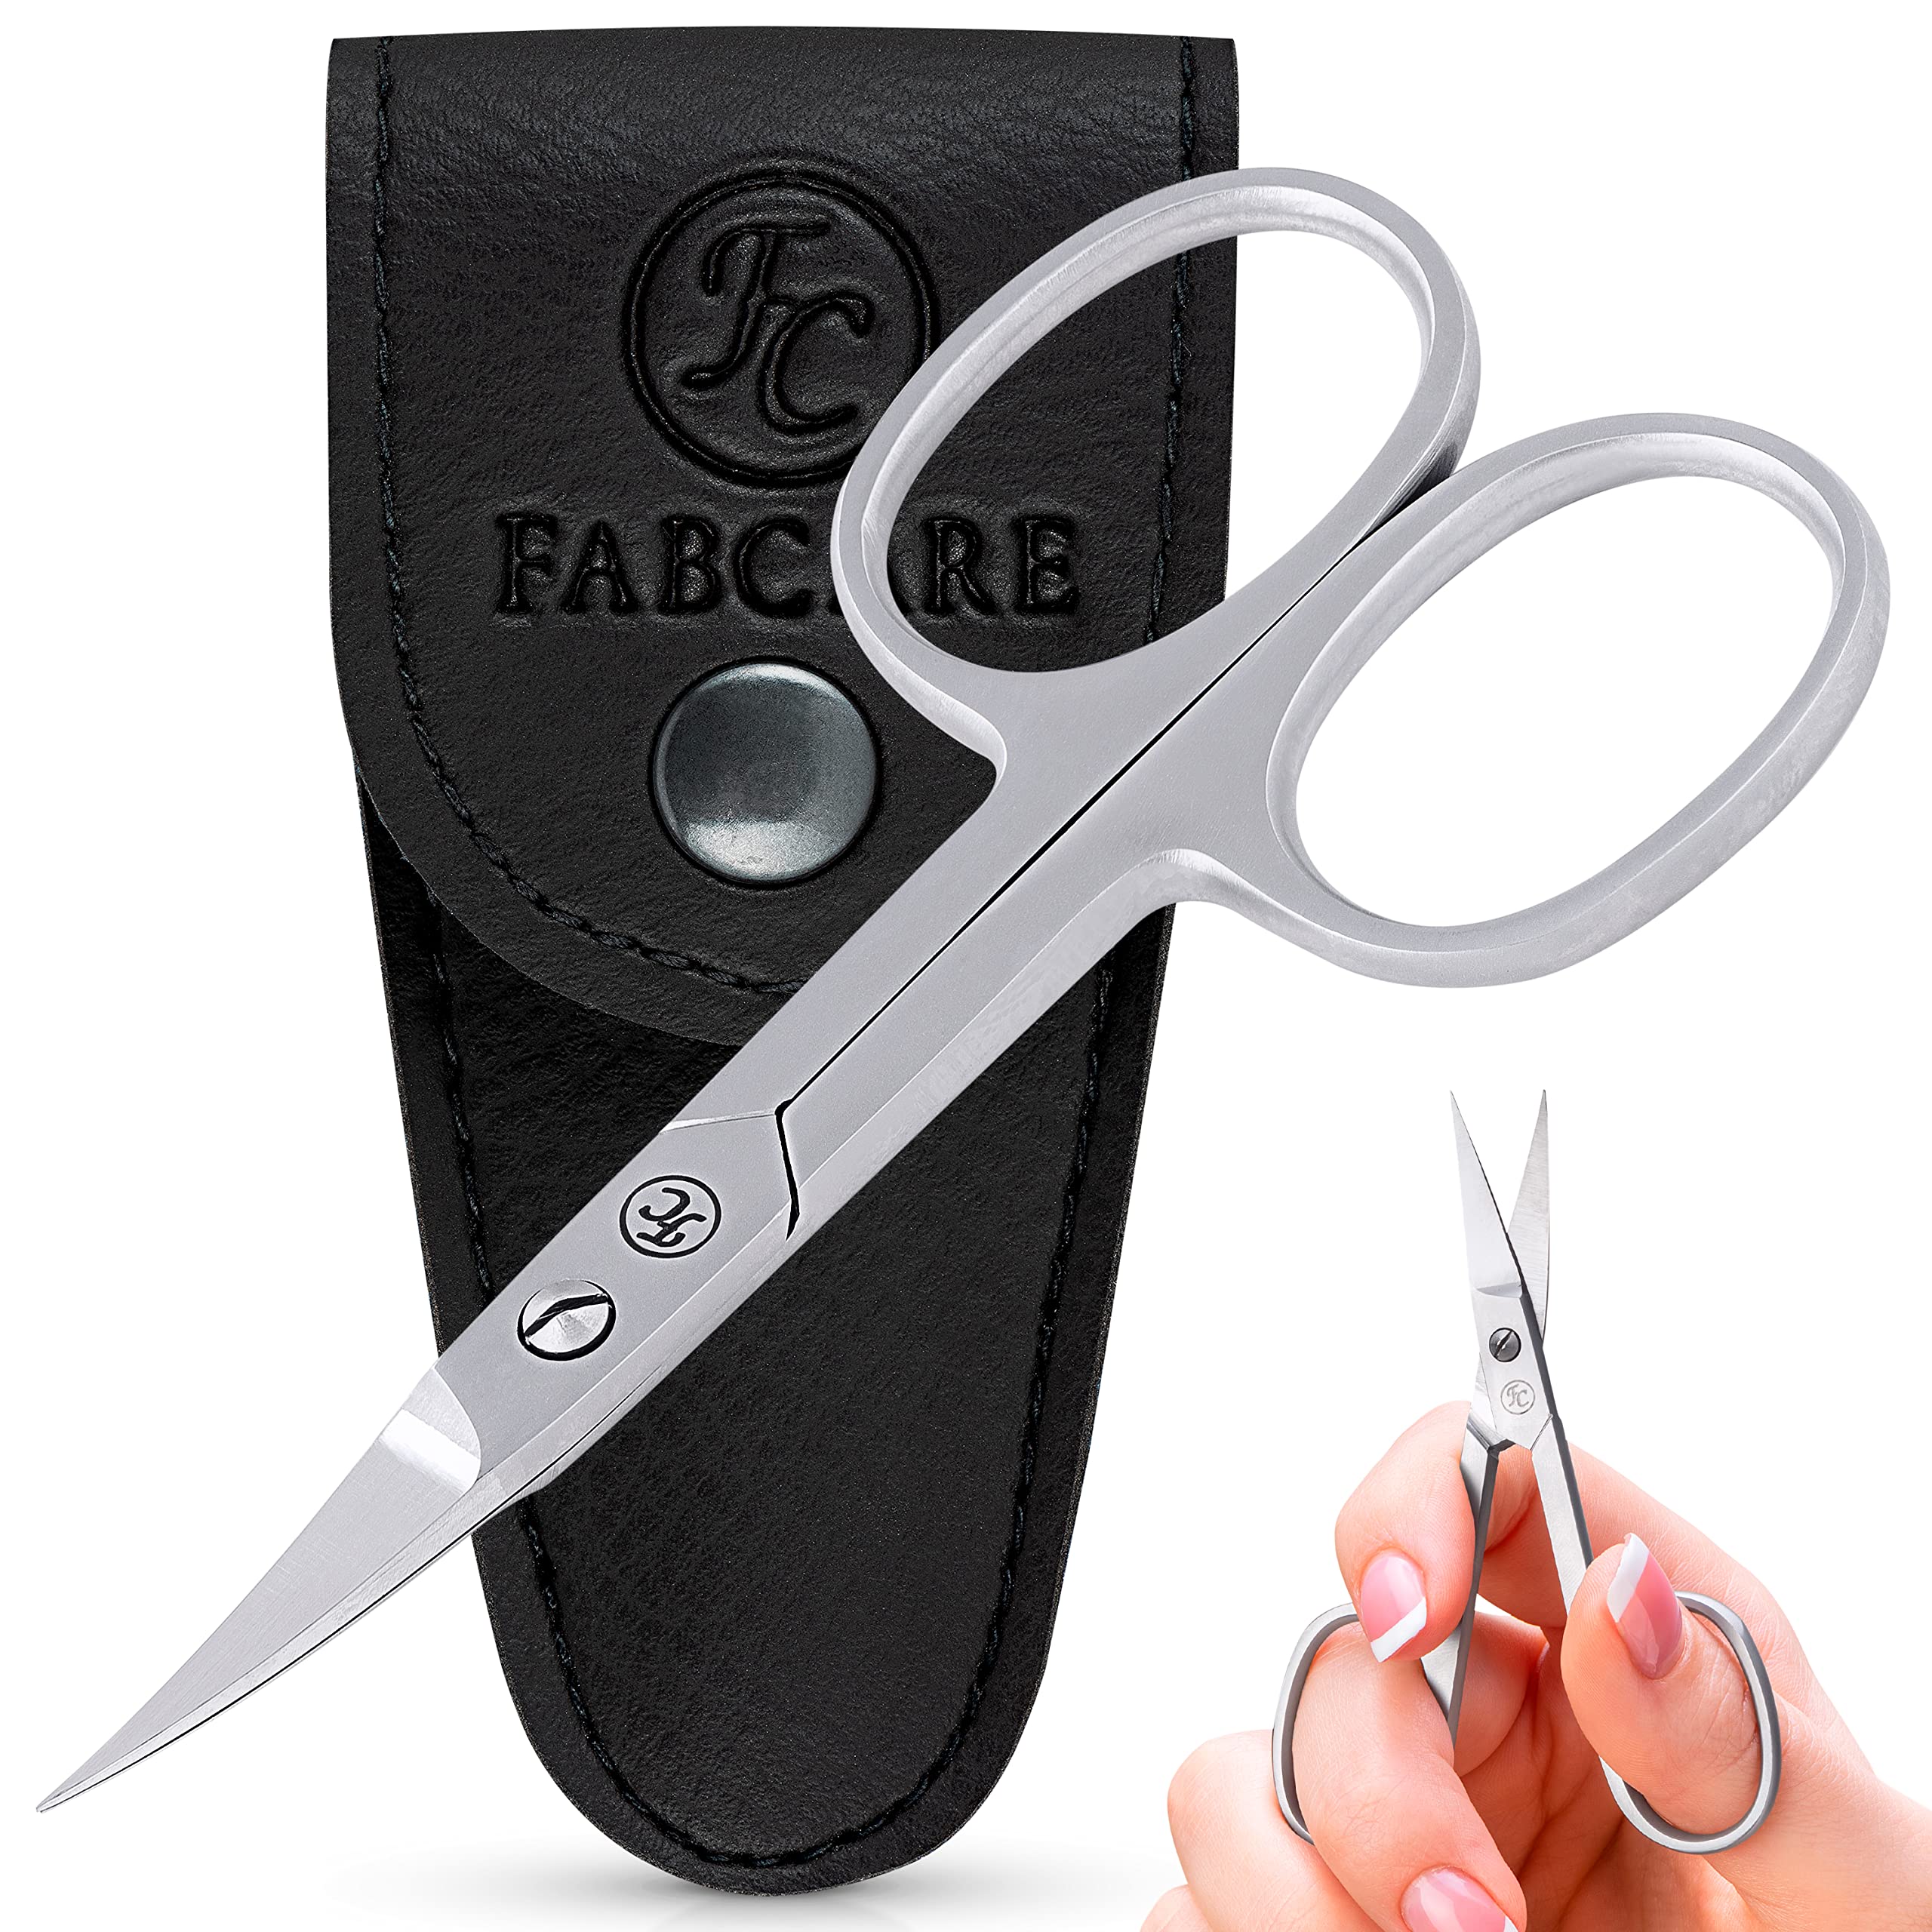 FABCARE curved nail scissors incl. pouch & e-book - innovative